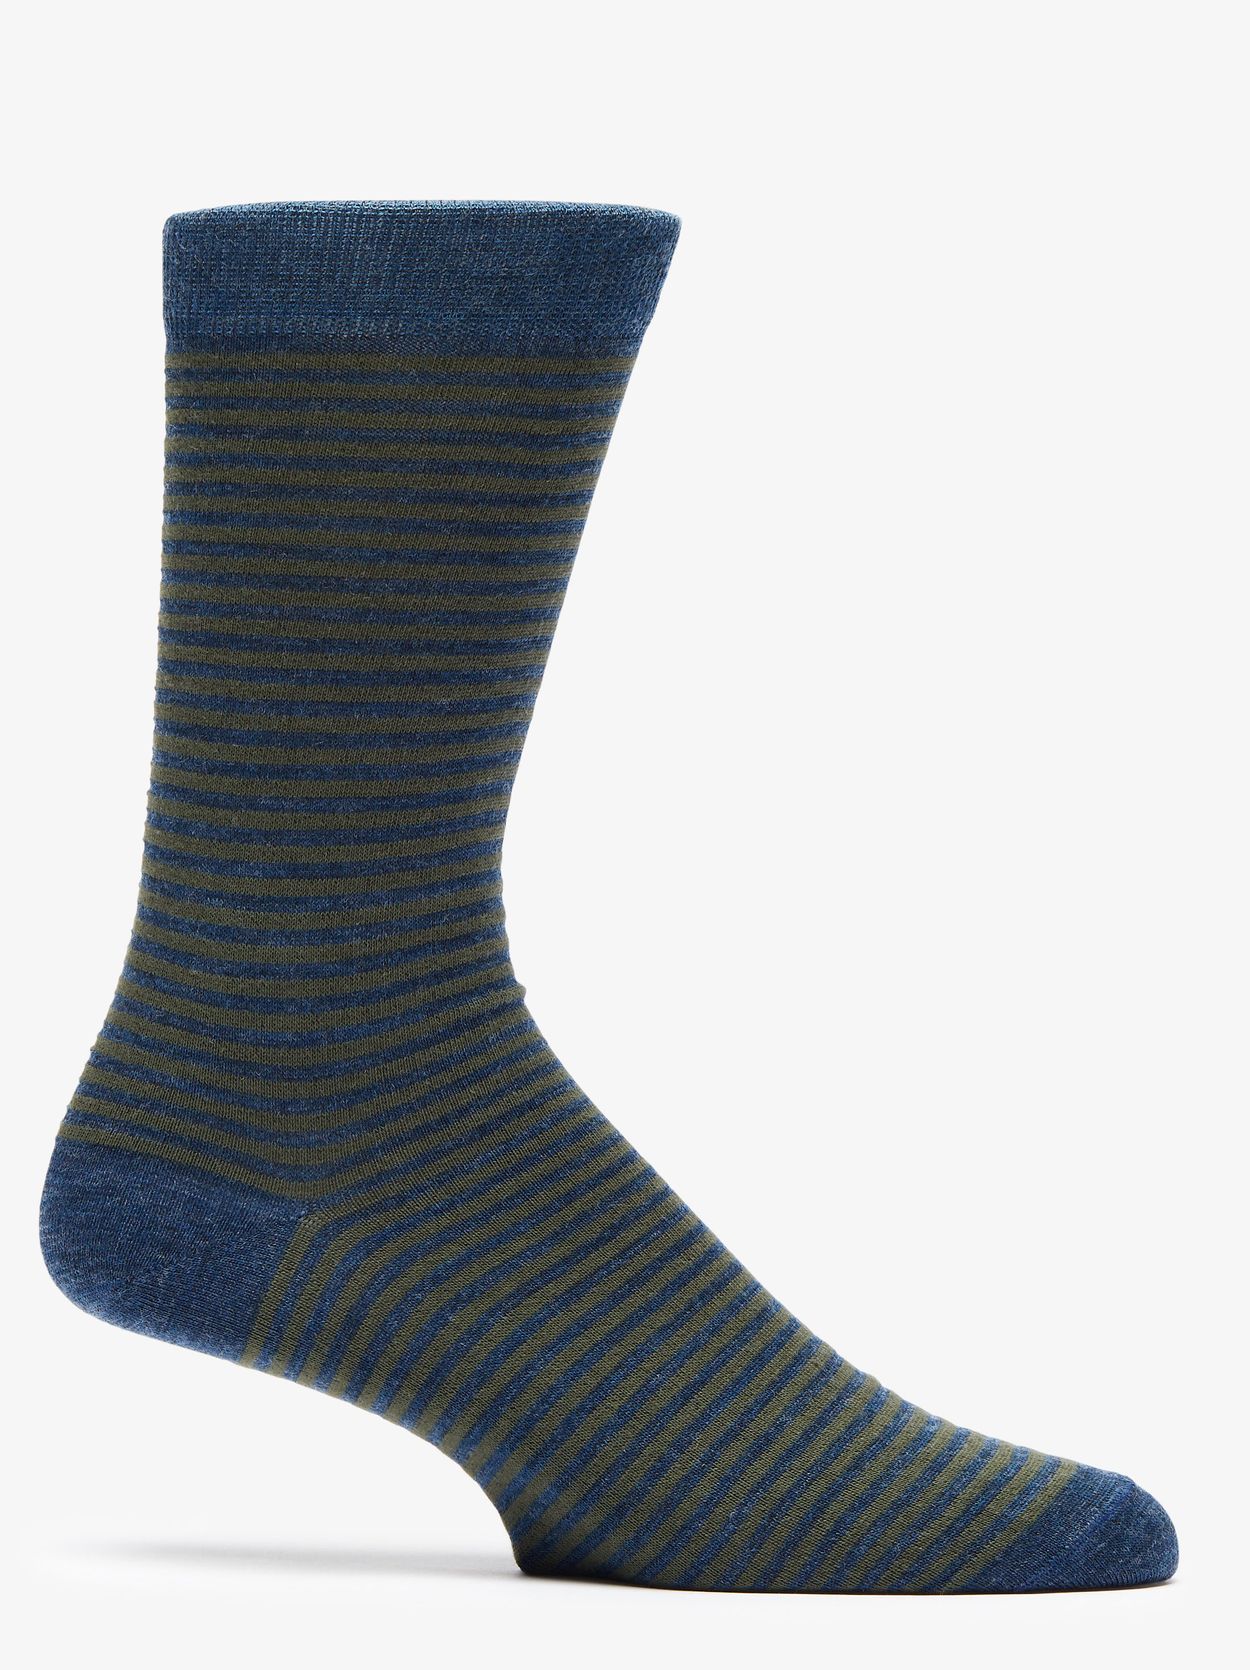 Blue & Green Socks Niles